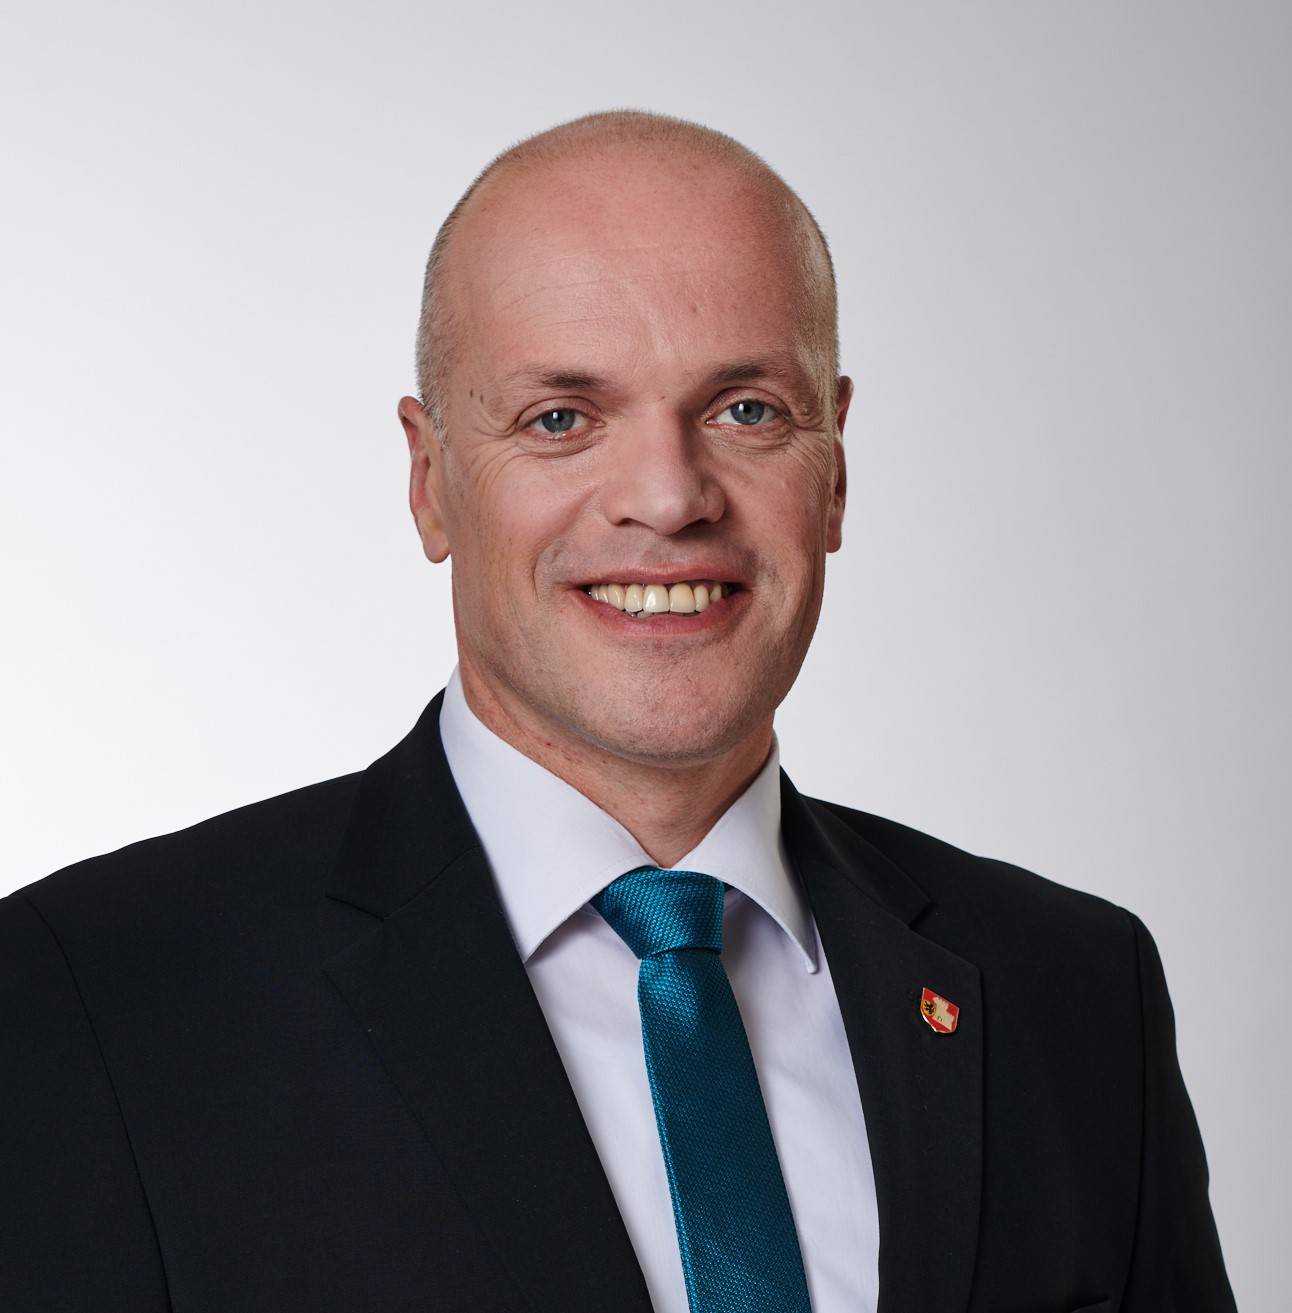 Bürgermeister Klaus Krützen wil den Service